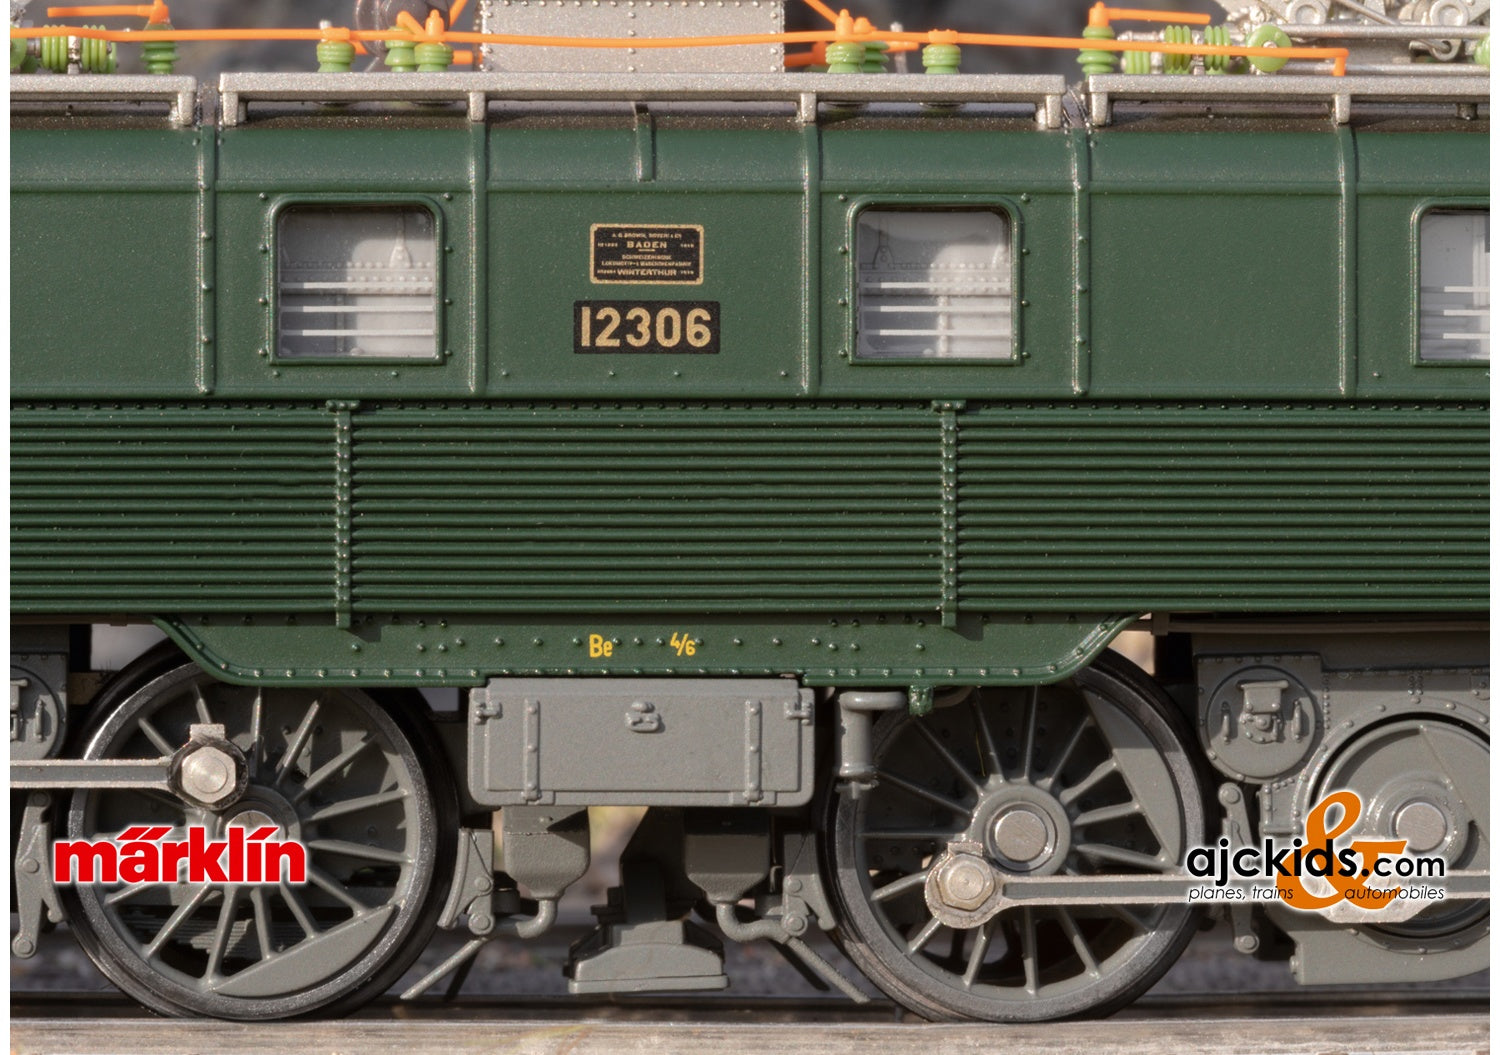 Marklin 39511 - Class Be 4/6 Electric Locomotive at Ajckids.com